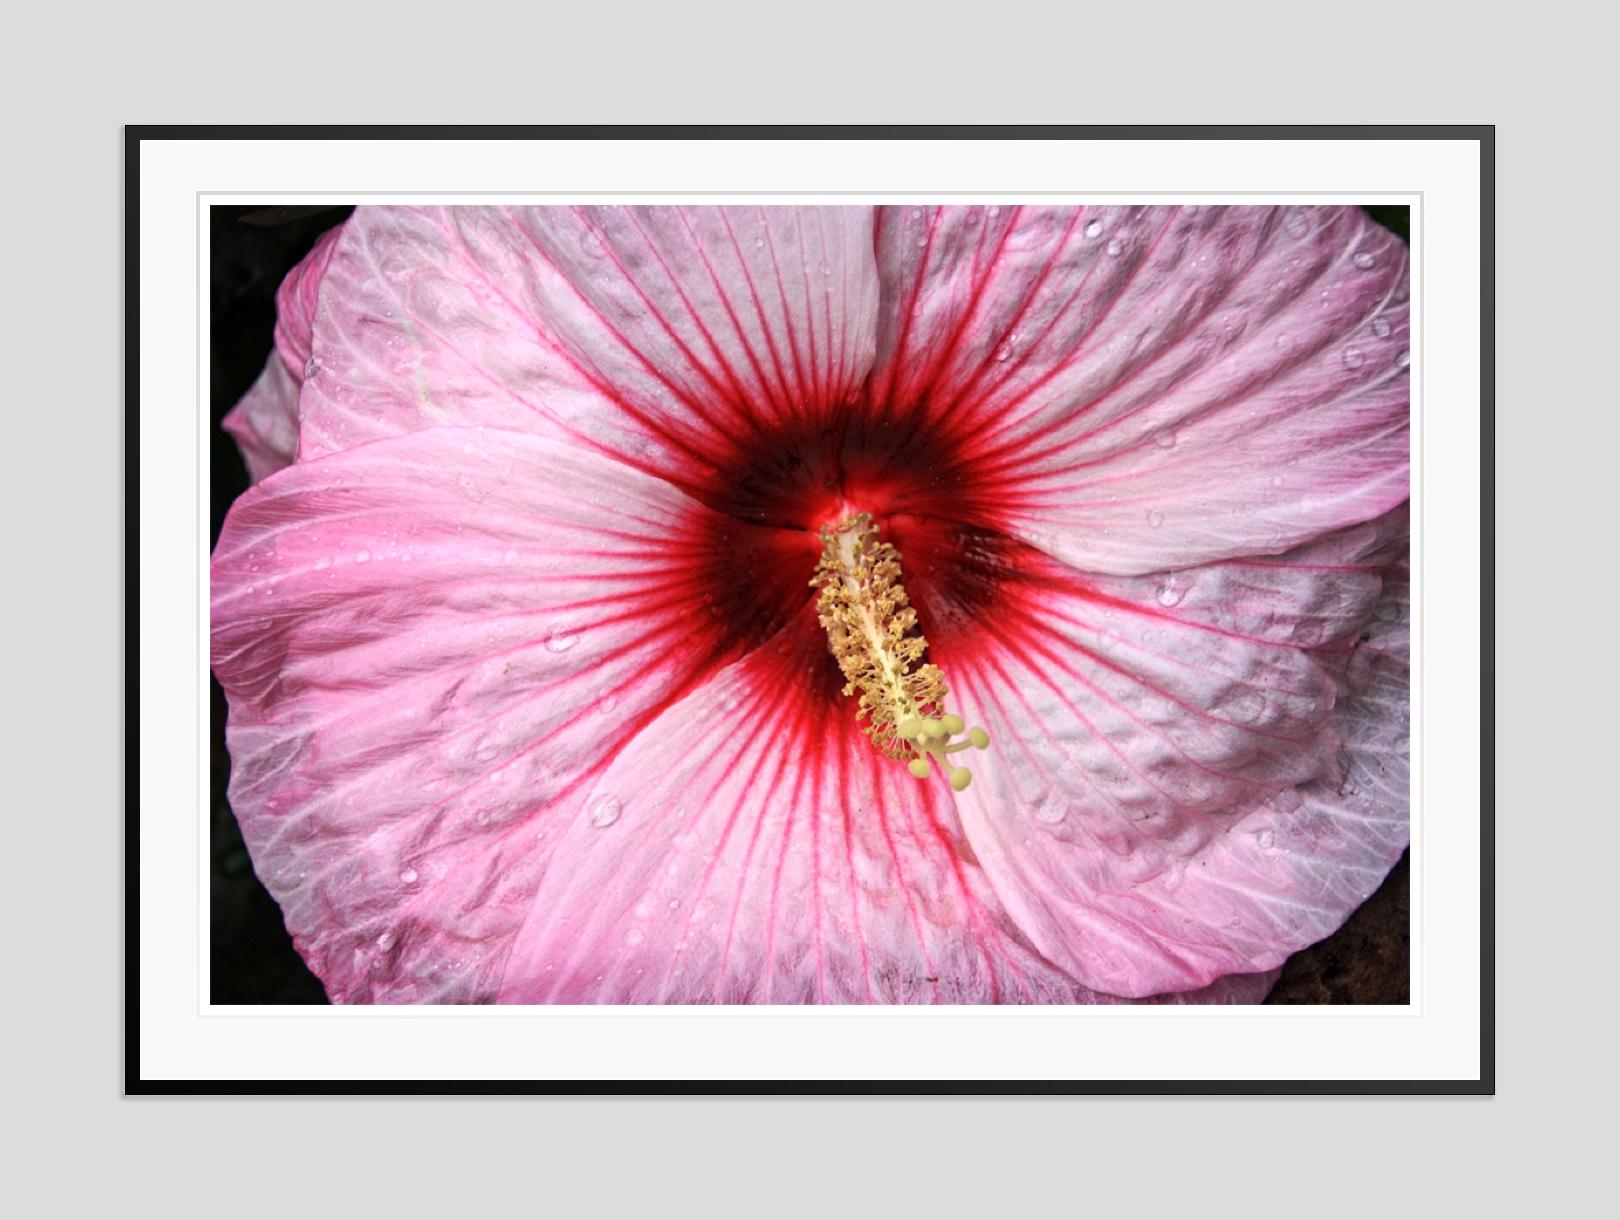 Sex Flower -  Oversize Signed Limited Edition Print  - Photograph by Stuart Möller